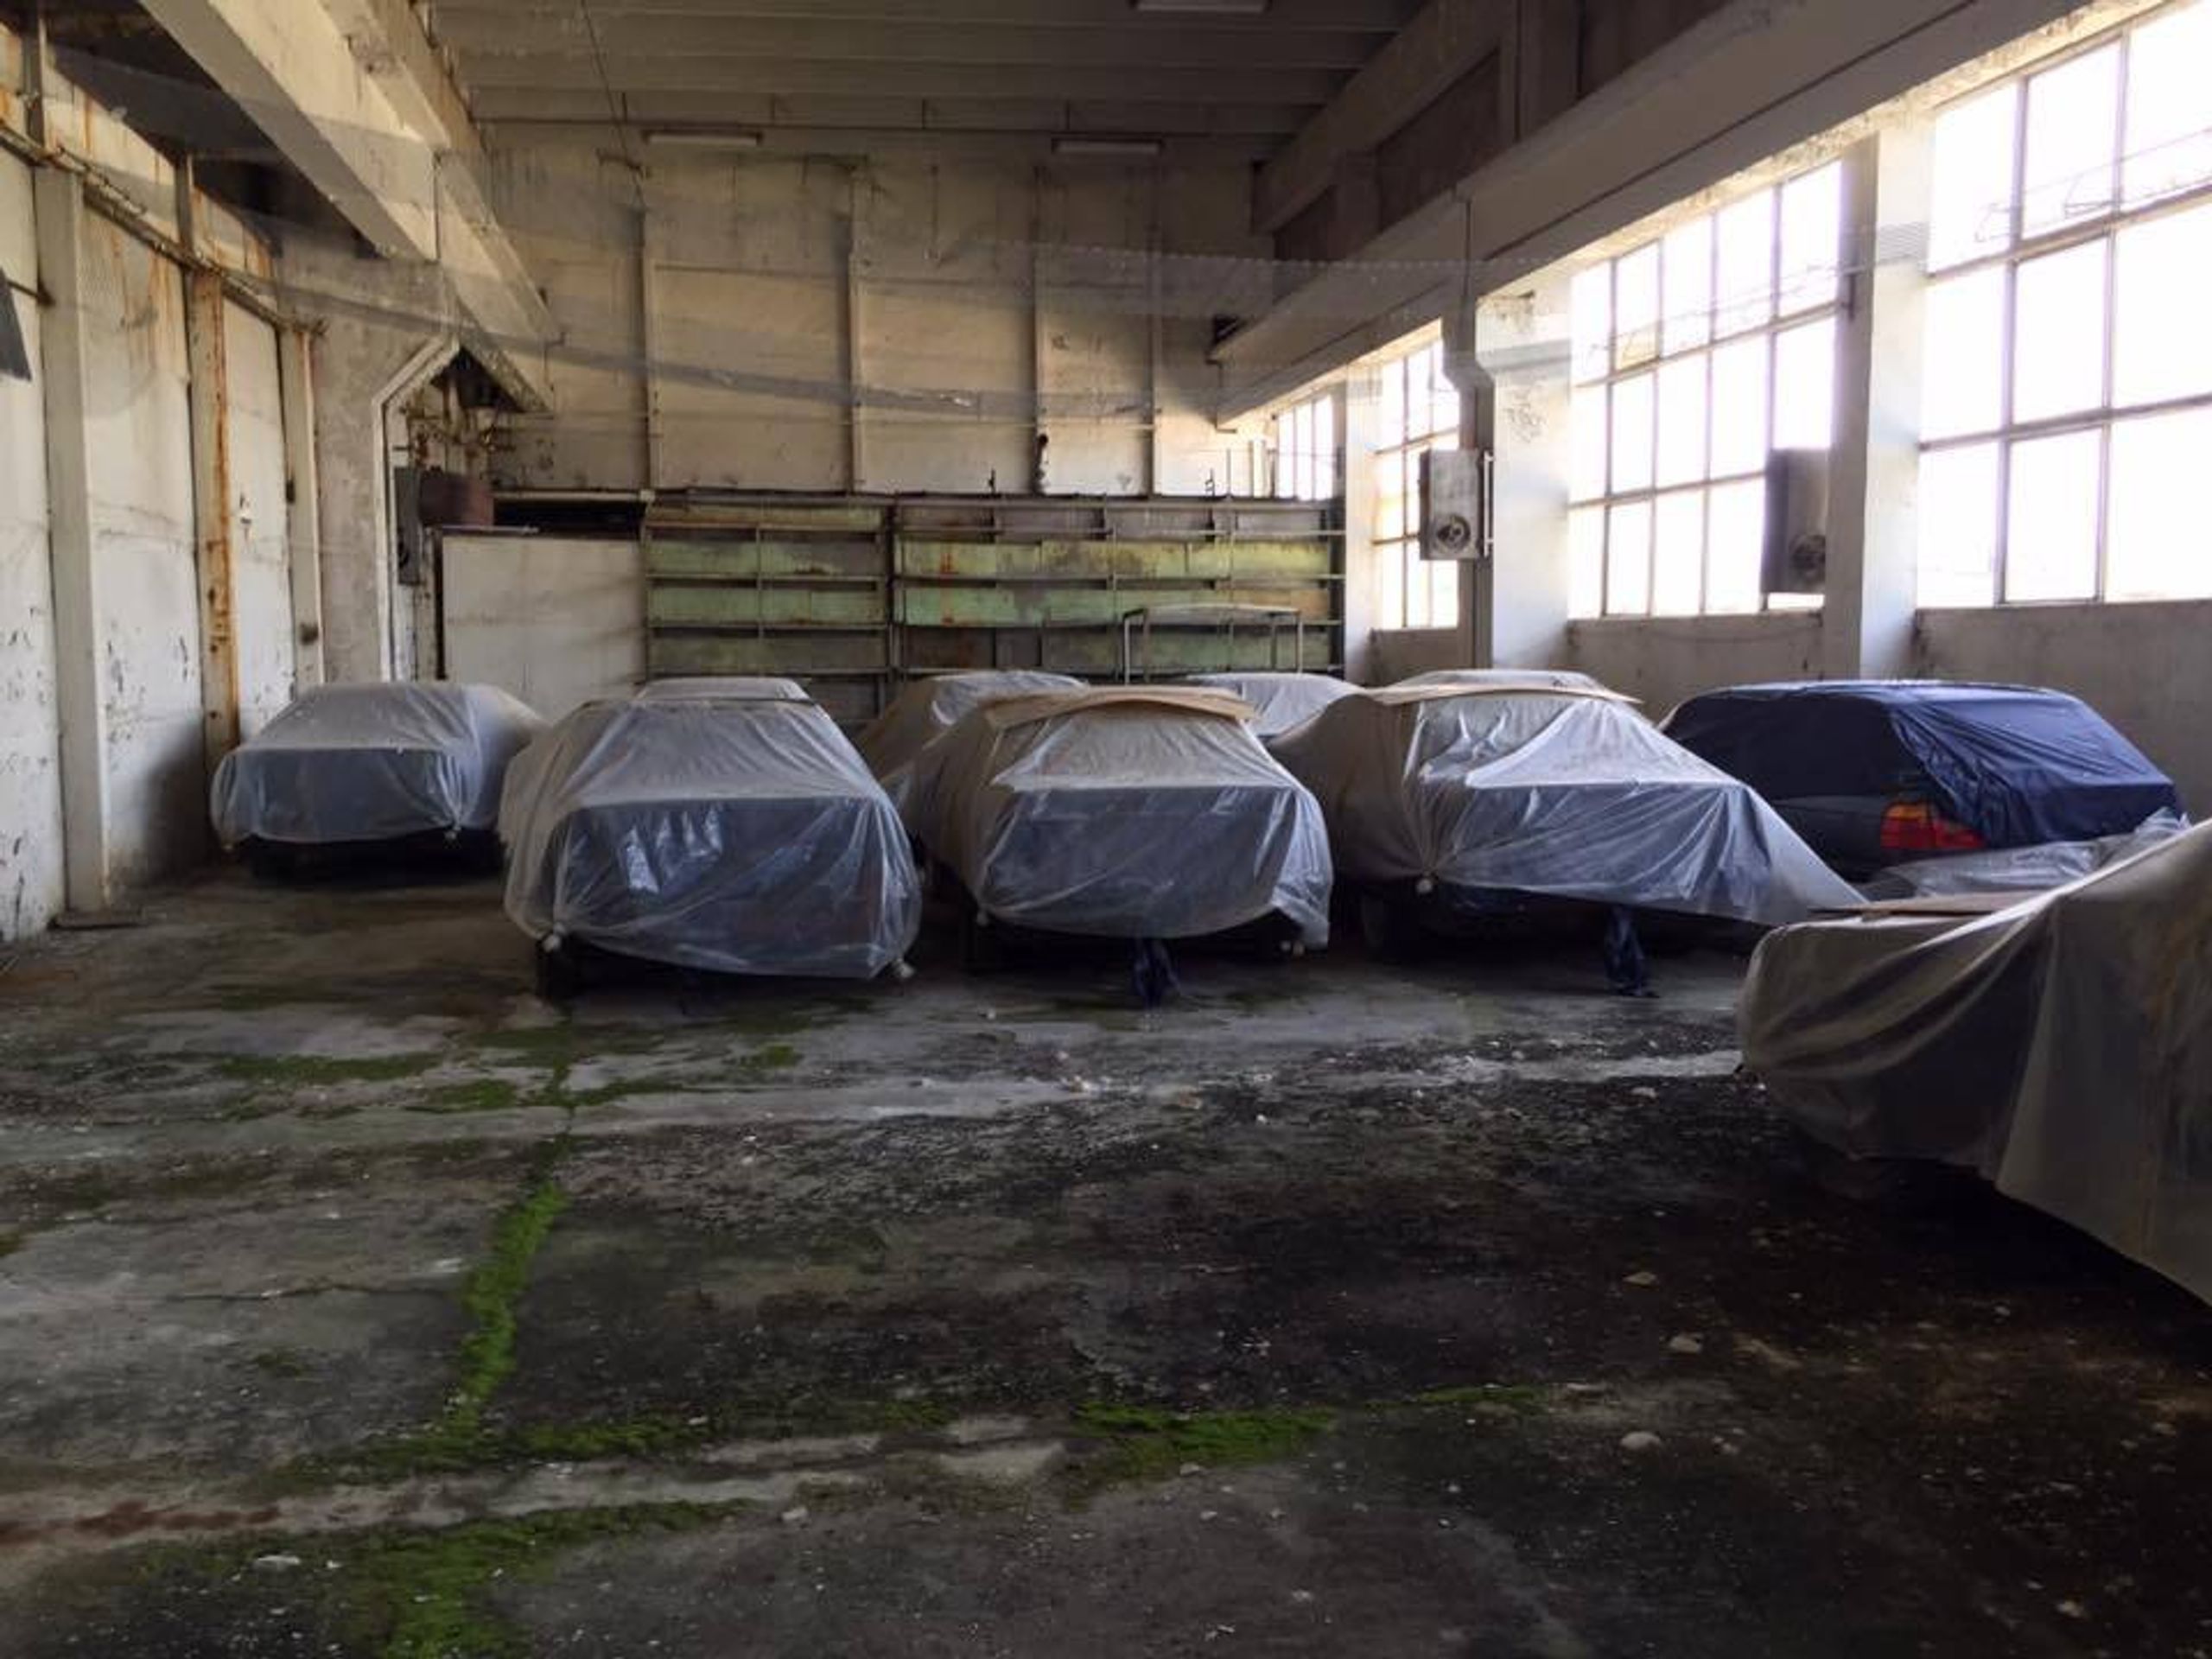 Sklad 25 let ukrýval 11 vozů BMW řady 5 - 27 - Fotogalerie: V bulharském skladu se 25 let skrýval poklad (8/16)